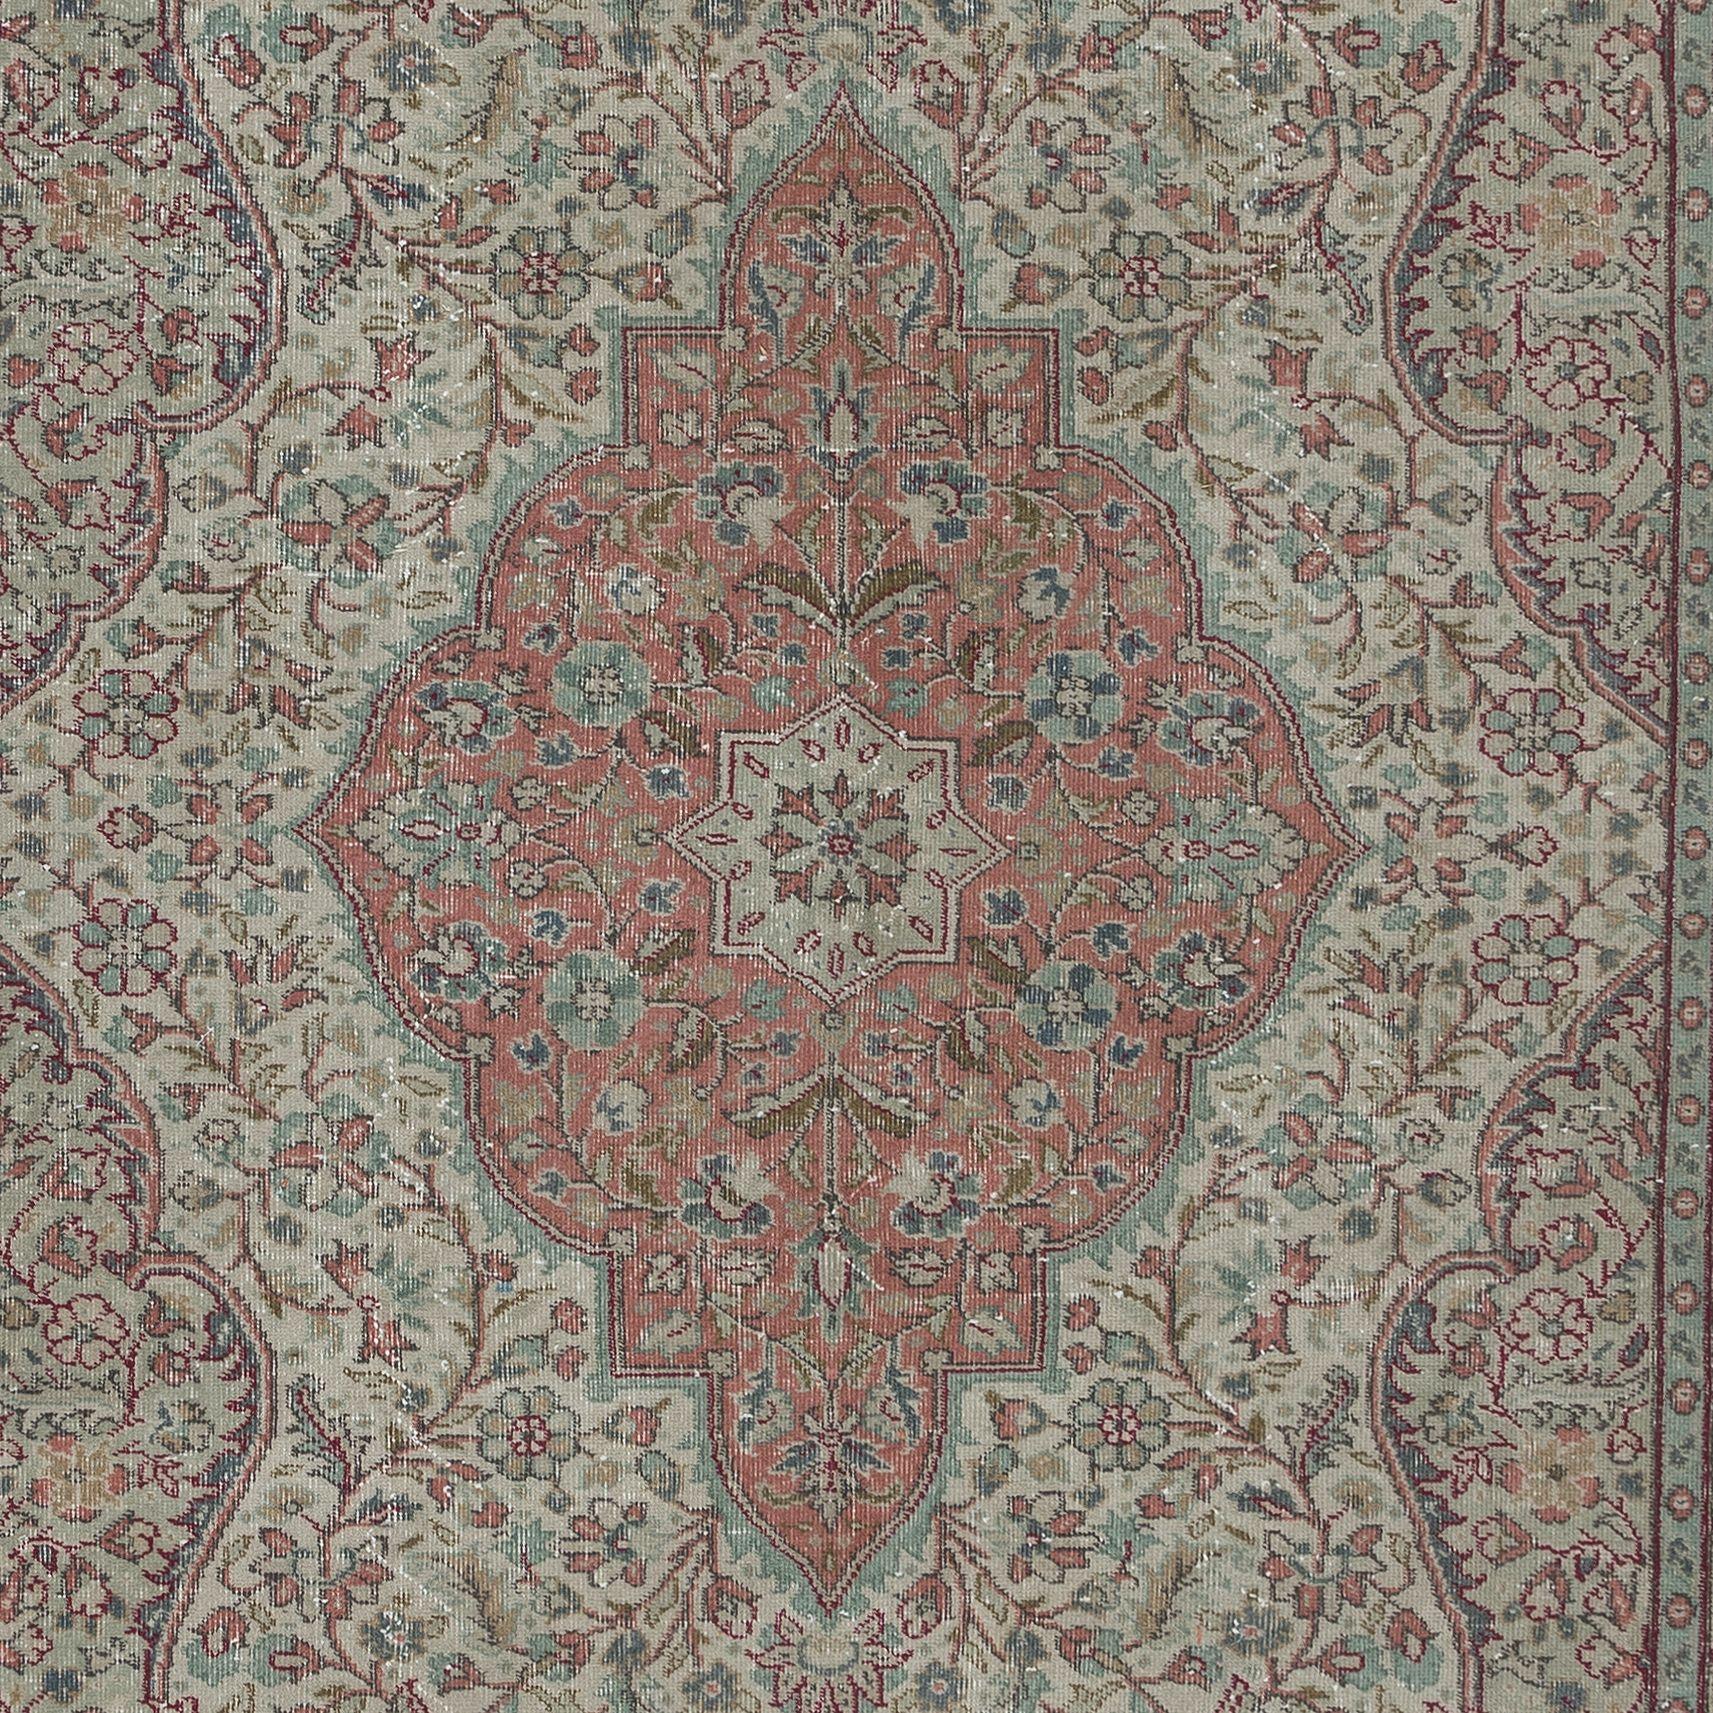 7.4x10.7 Ft Unique Vintage Village Rug, Handmade Turkish Medallion Design Carpet In Good Condition For Sale In Philadelphia, PA